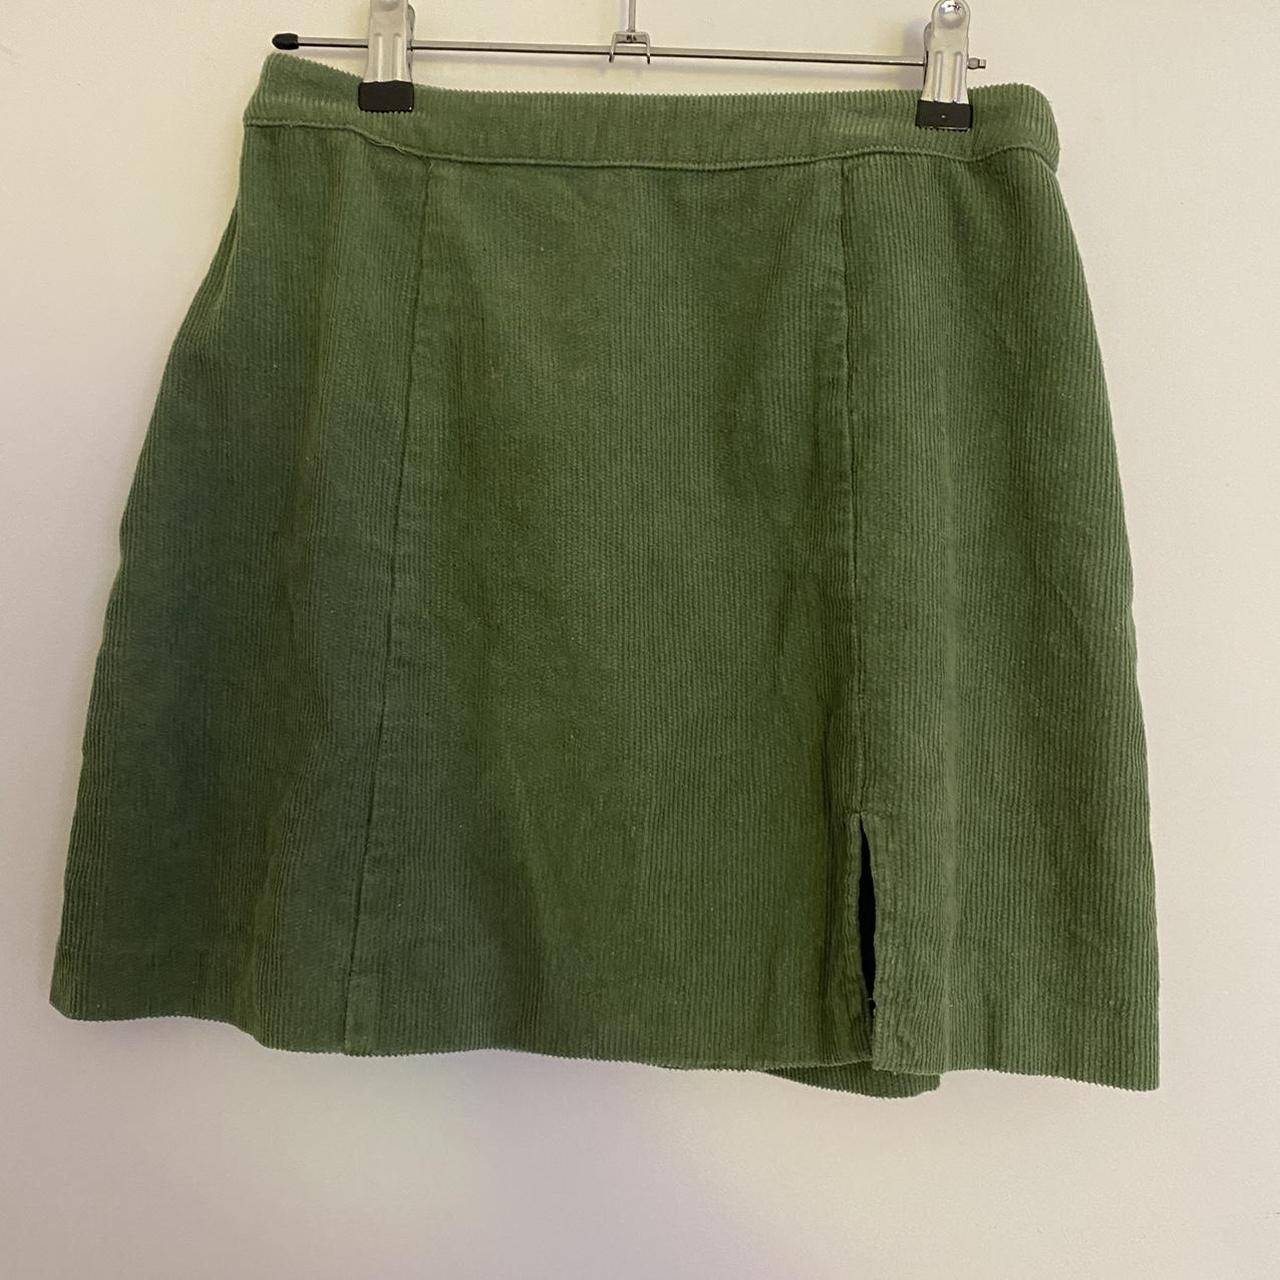 Beyond Her Green cord mini skirt Size: 10 but fits... - Depop